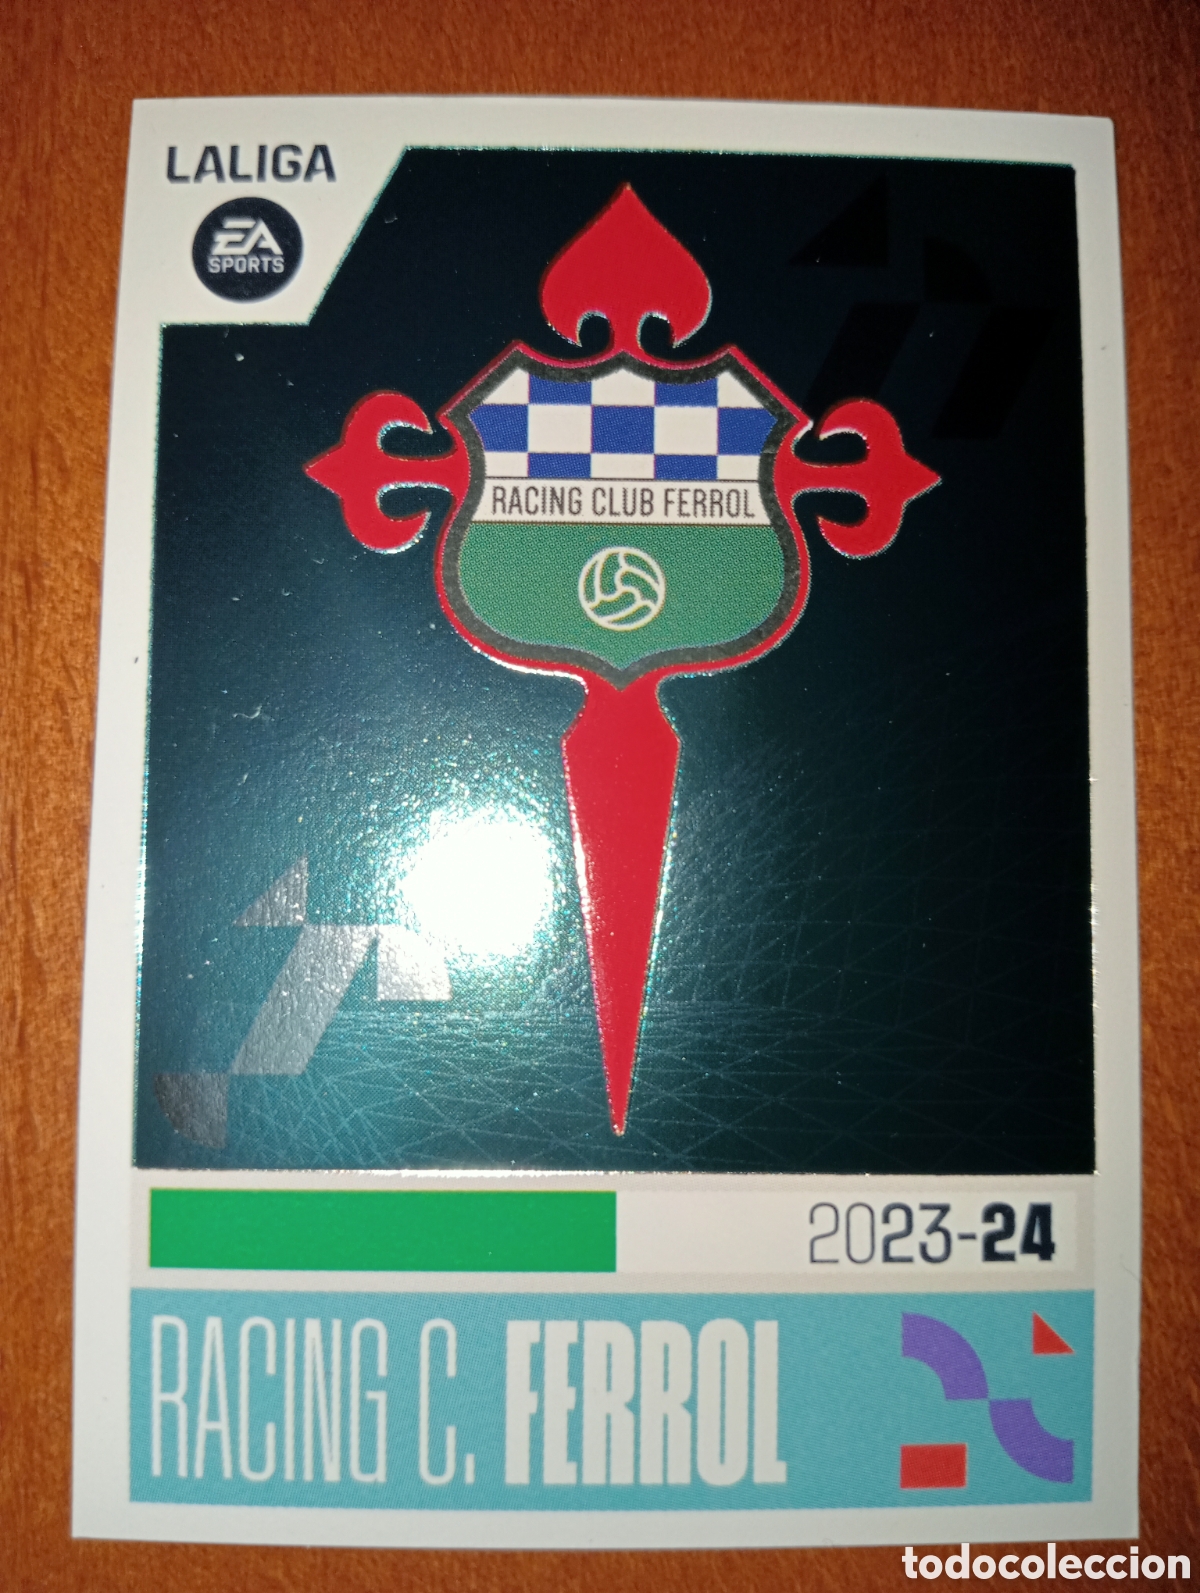 Racing de Ferrol, Racing Club de Ferrol